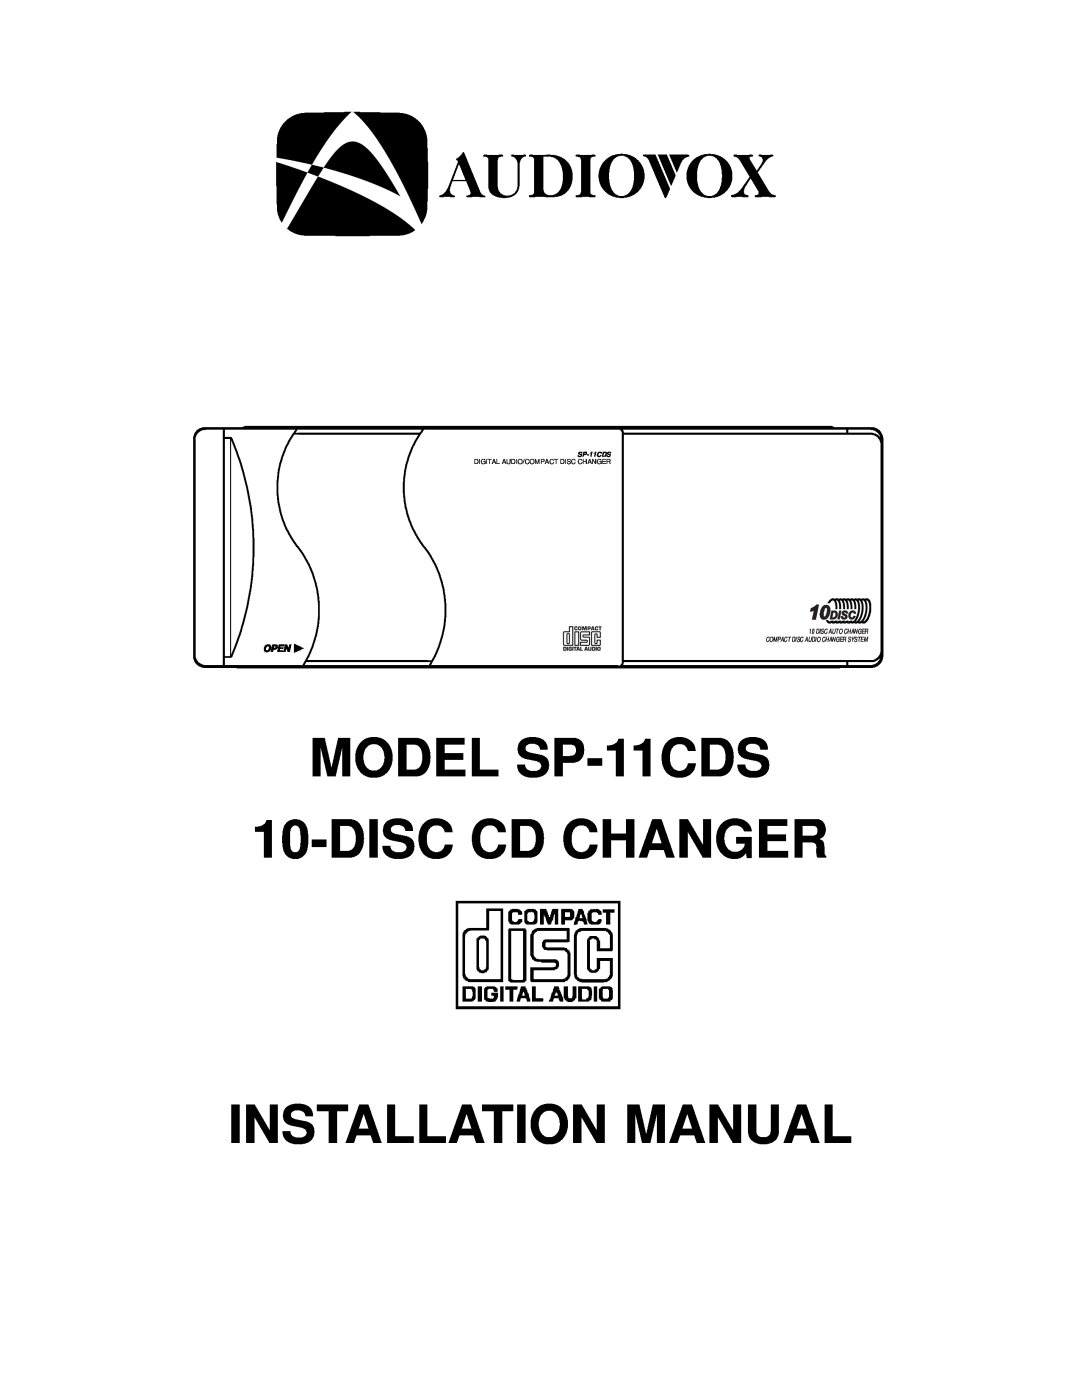 Audiovox installation manual MODEL SP-11CDS 10-DISCCD CHANGER, Installation Manual, Digital Audio/Compact Disc Changer 